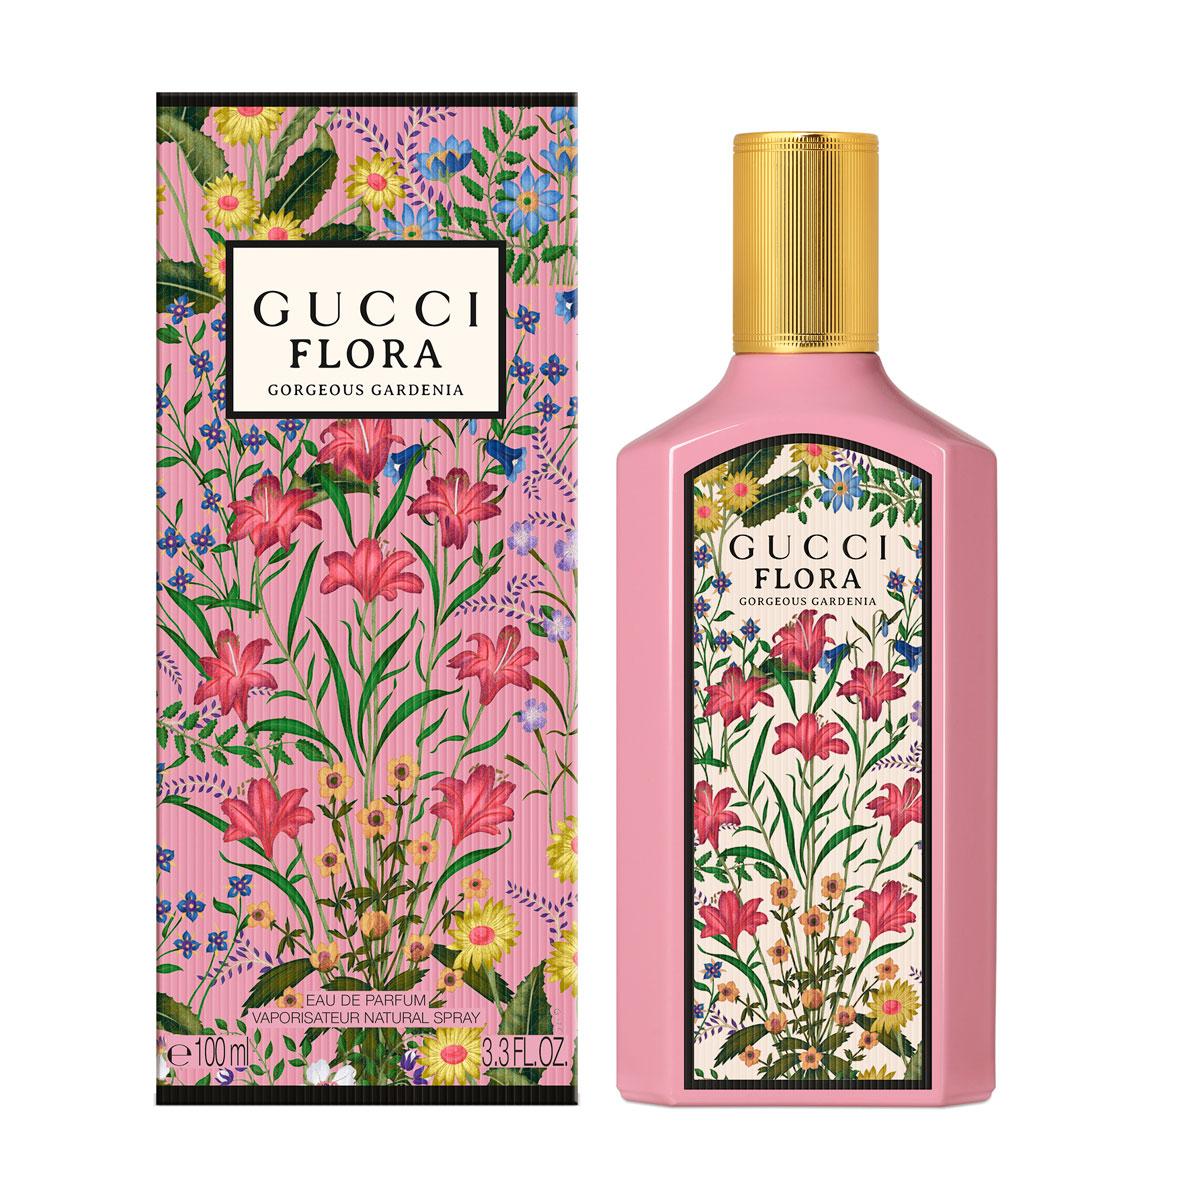 Gucci Flora Gorgeous Gardenia Eau de Parfum 100ml | FEELUNIQUE